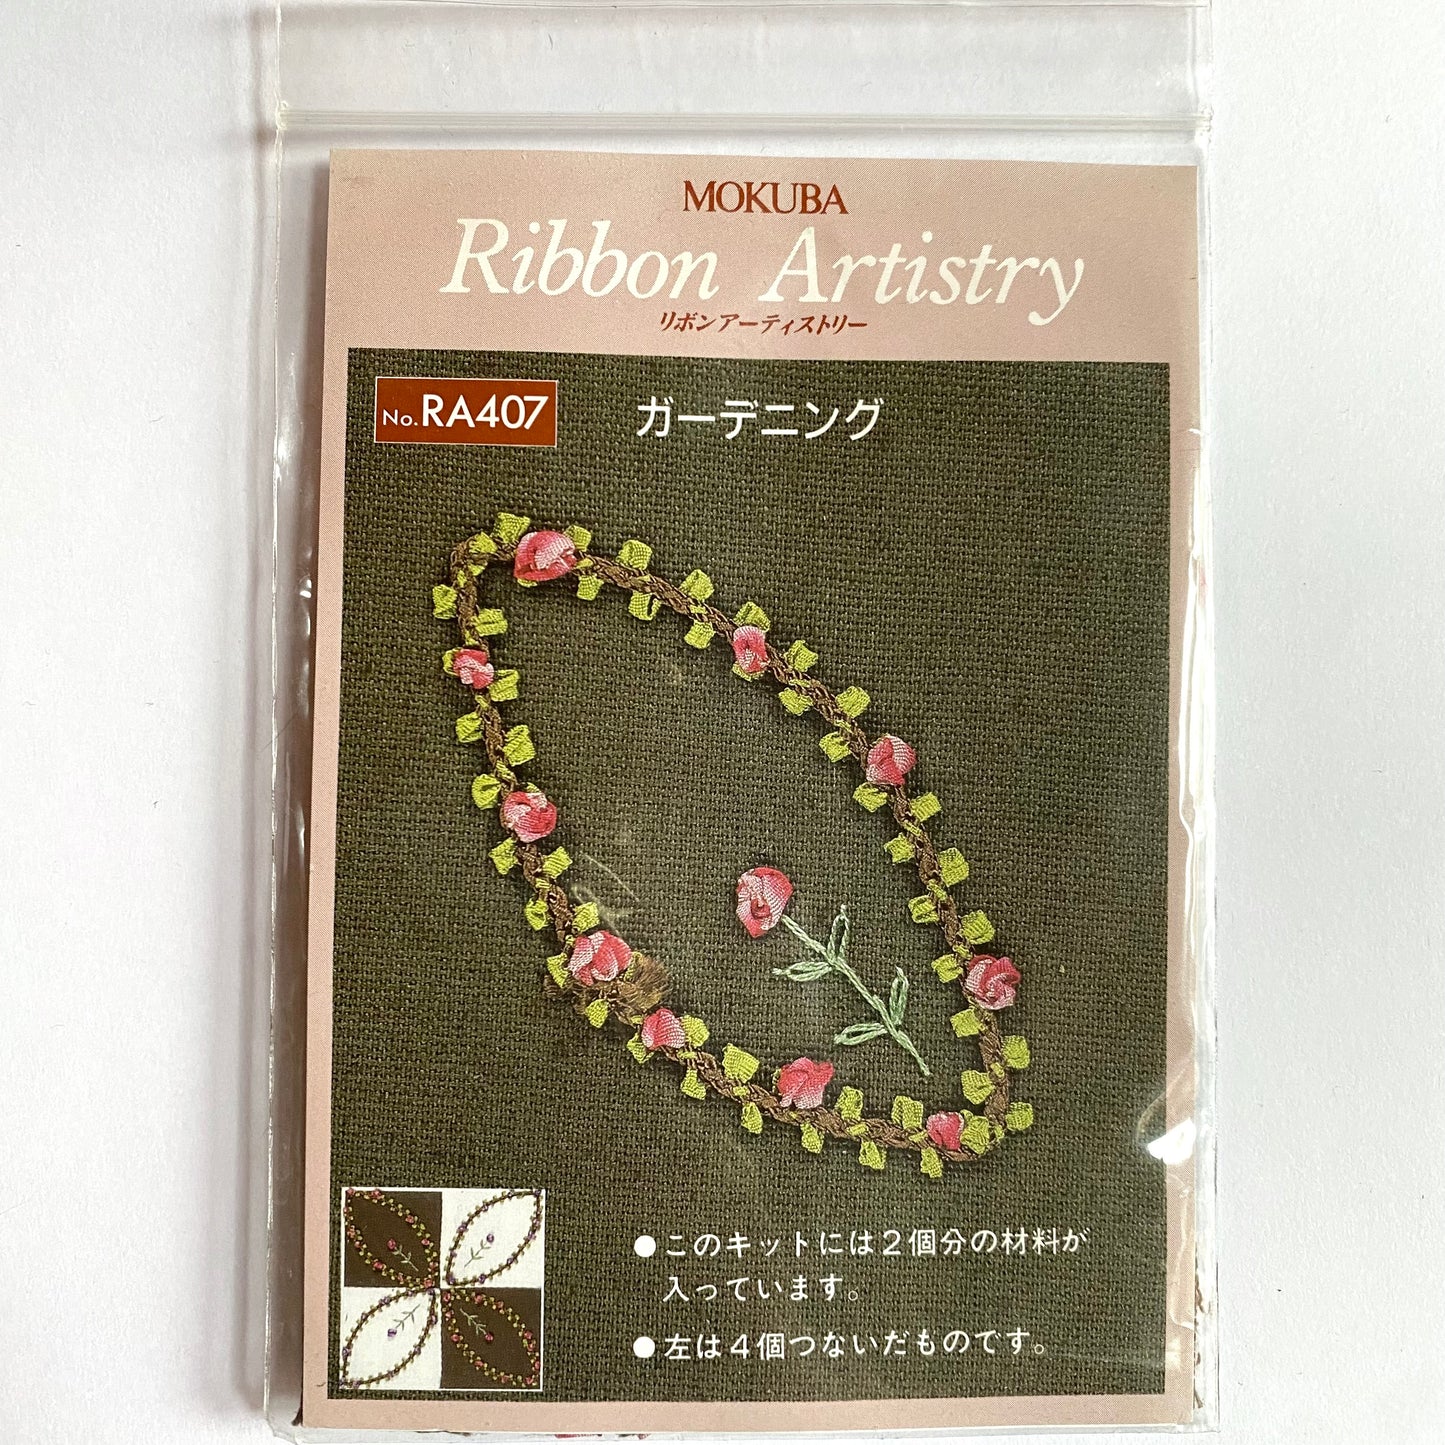 Mokuba embroidery kit (ribbon embroidery)